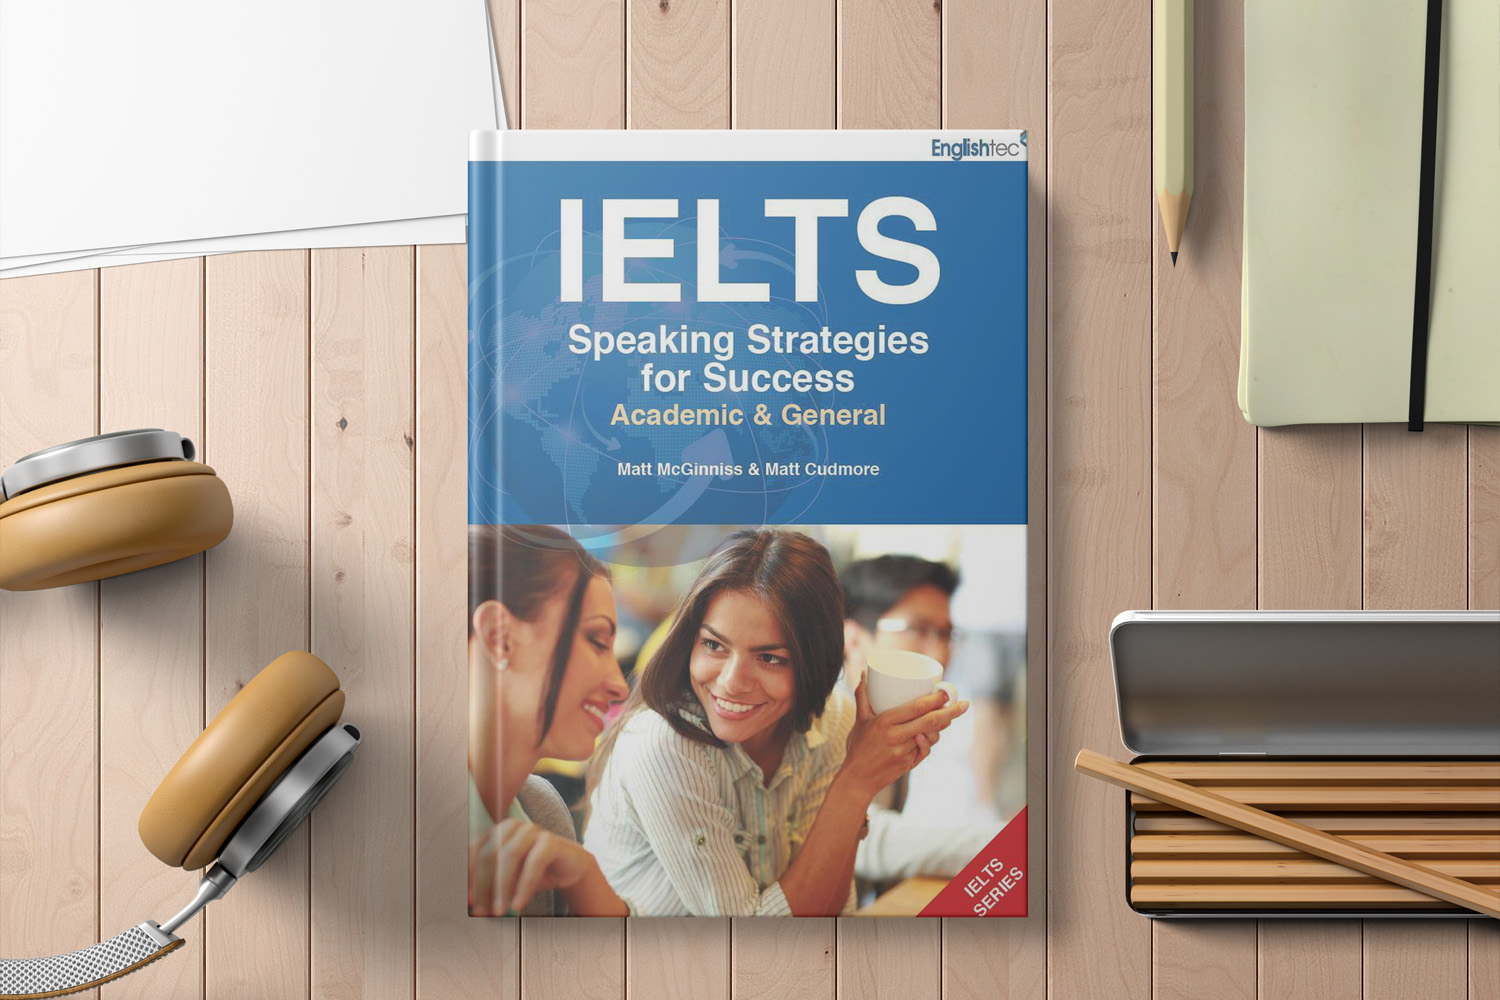 IELTS Speaking Strategies for Success